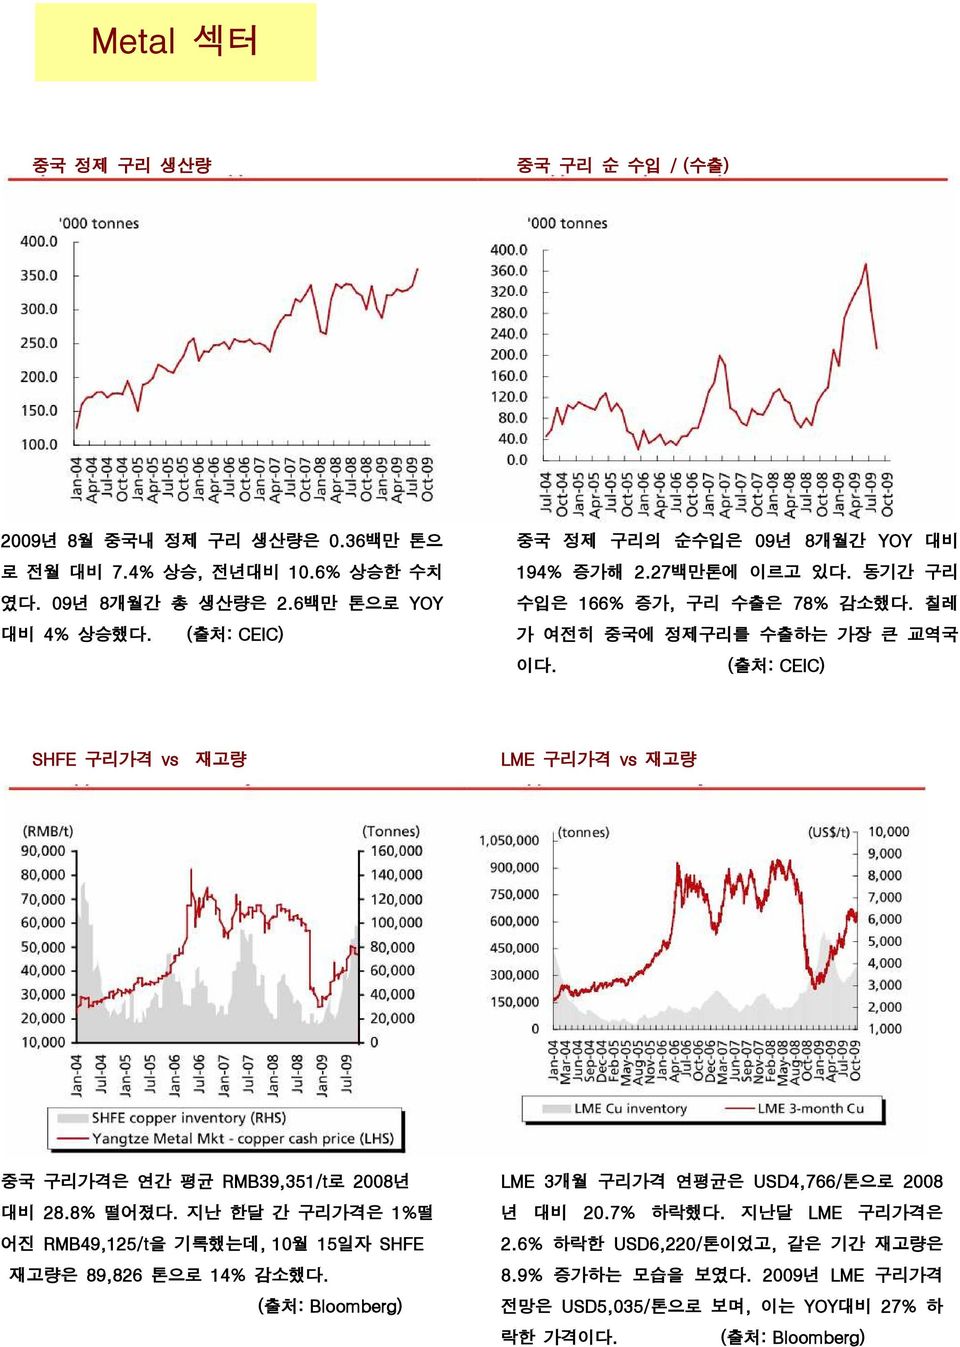 SHFE 구리가격 vs 재고량 LME 구리가격 vs 재고량 중국 구리가격은 연간 평균 RMB39,351/t로 2008년 대비 28.8% 떨어졌다.